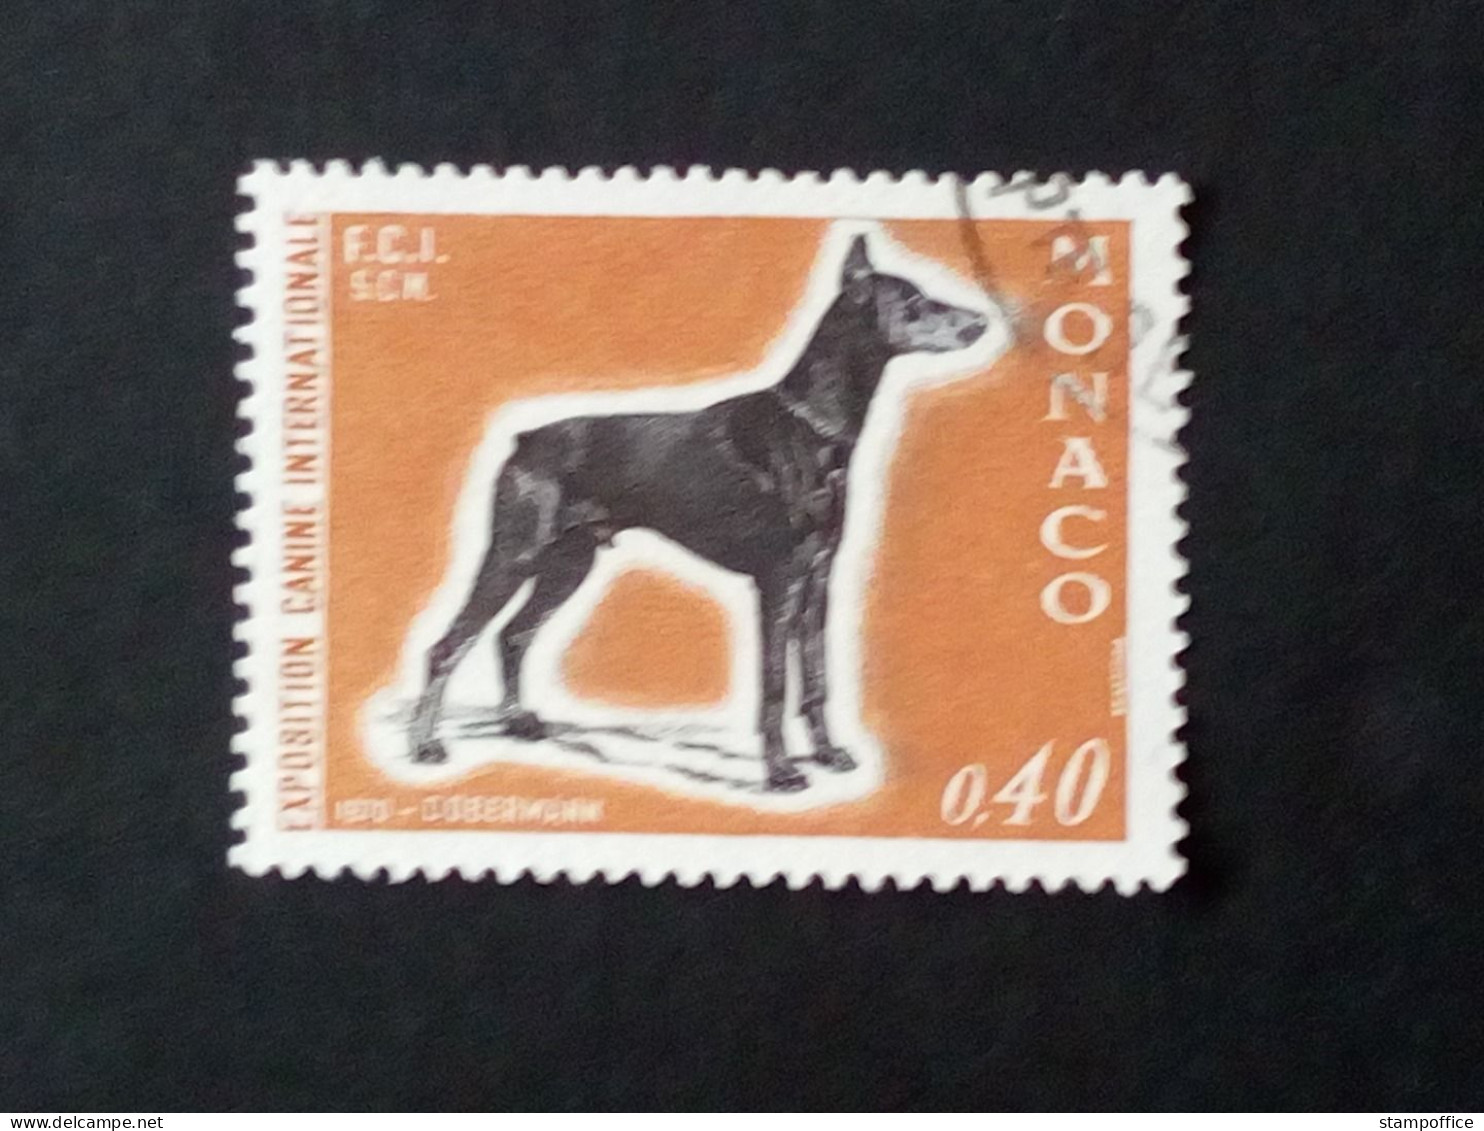 MONACO MI-NR. 965 GESTEMPELT(USED) HUNDEAUSSTELLUNG MONTE CARLO 1970 DOBERMANN - Used Stamps